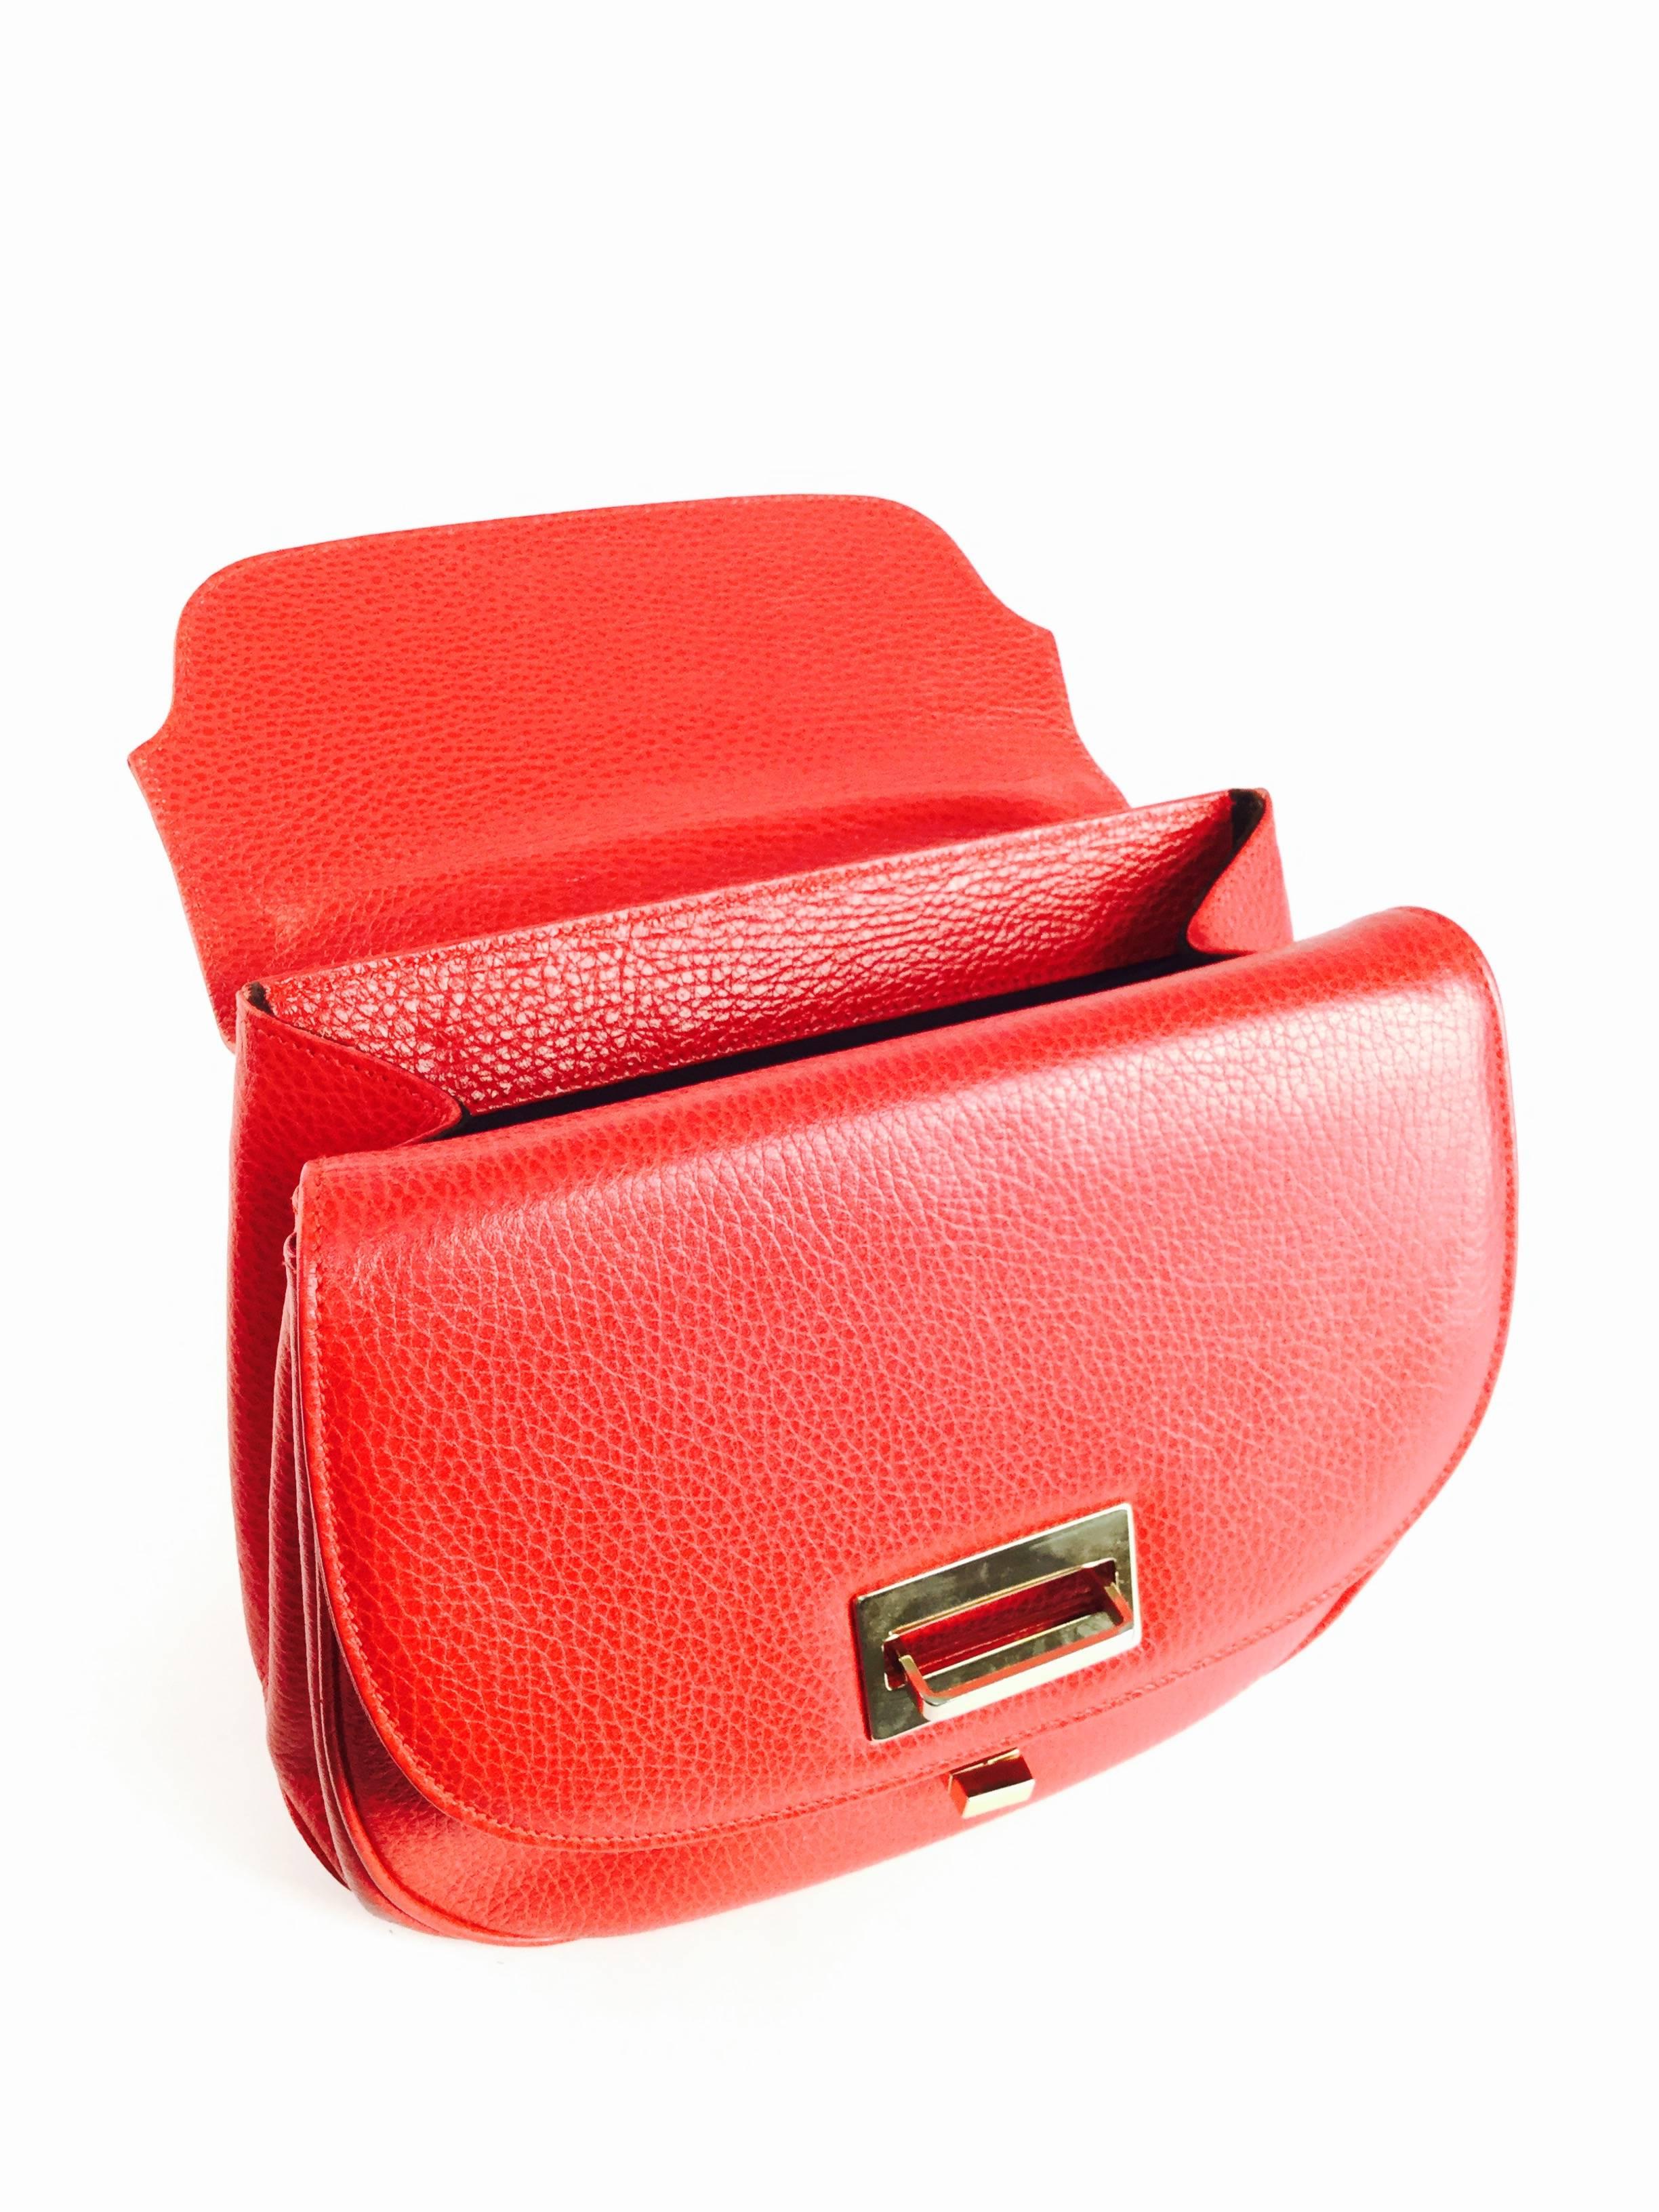  Vintage Oscar de la Renta Red Leather Top Handle Double Flap Saddle Bag In Excellent Condition For Sale In Houston, TX